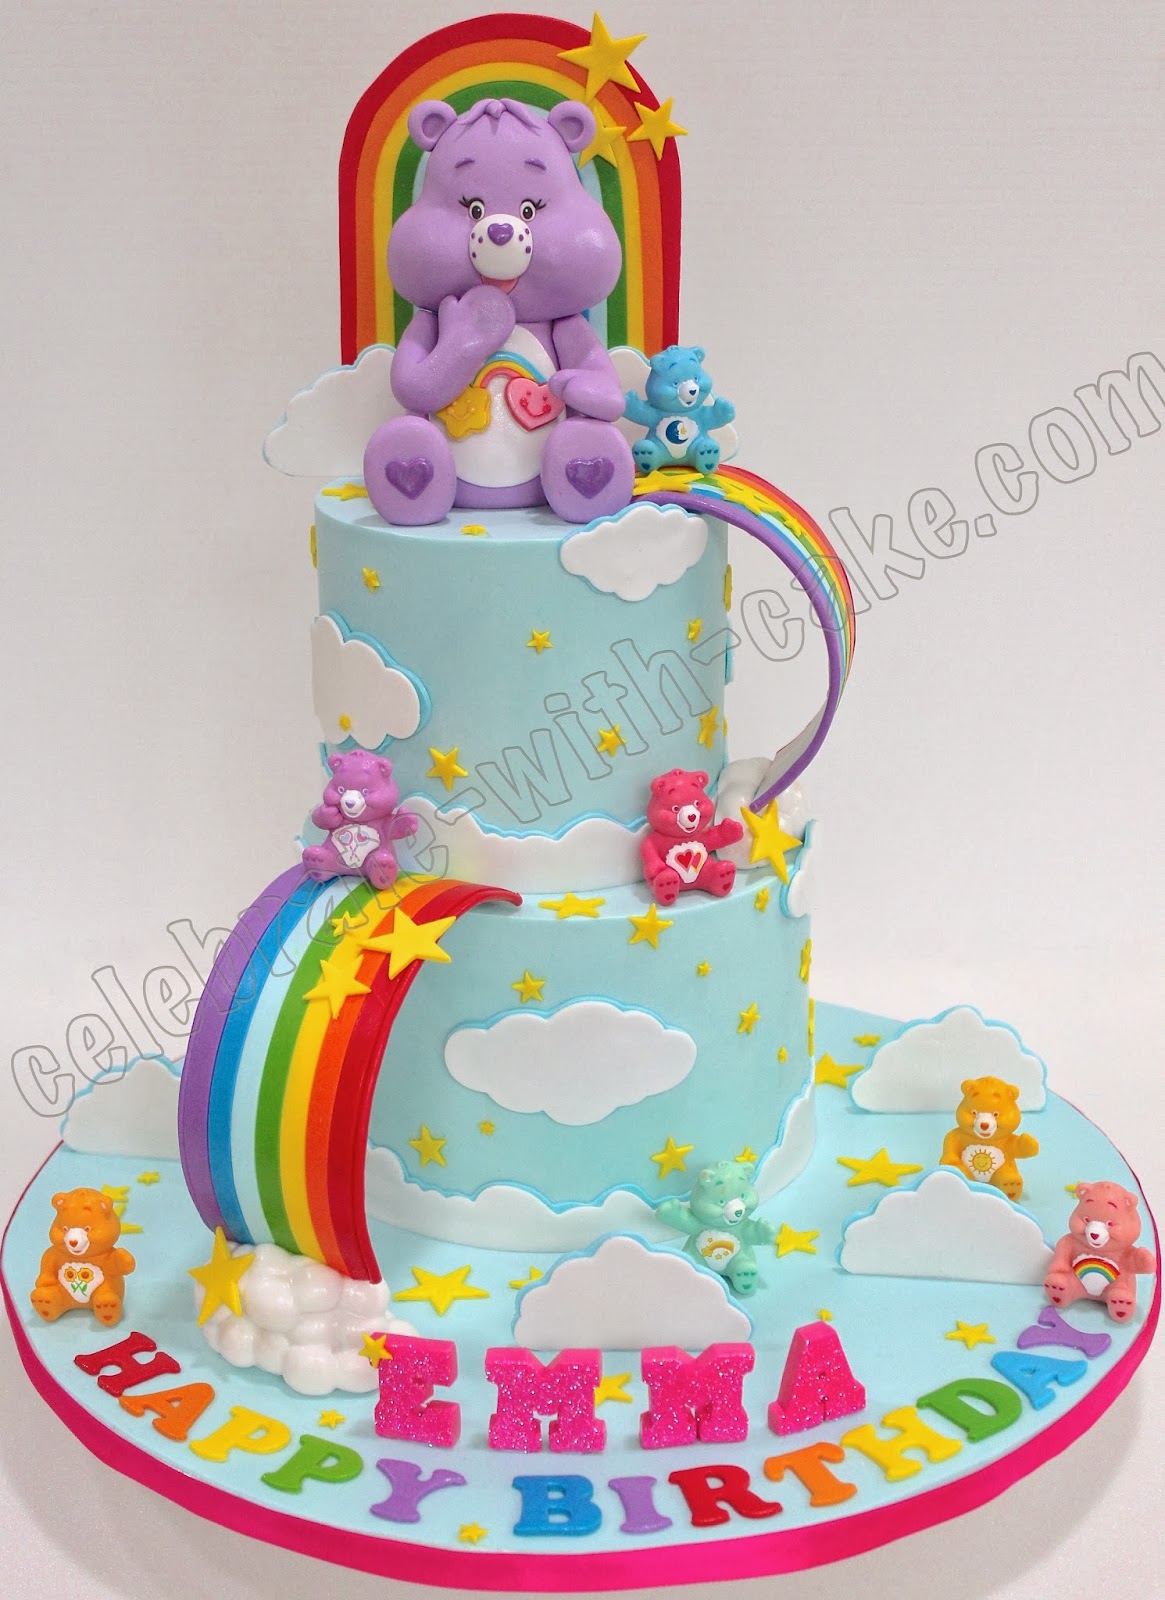 Celebrate with Cake! Care Bears and Rainbow 2 tier Cake